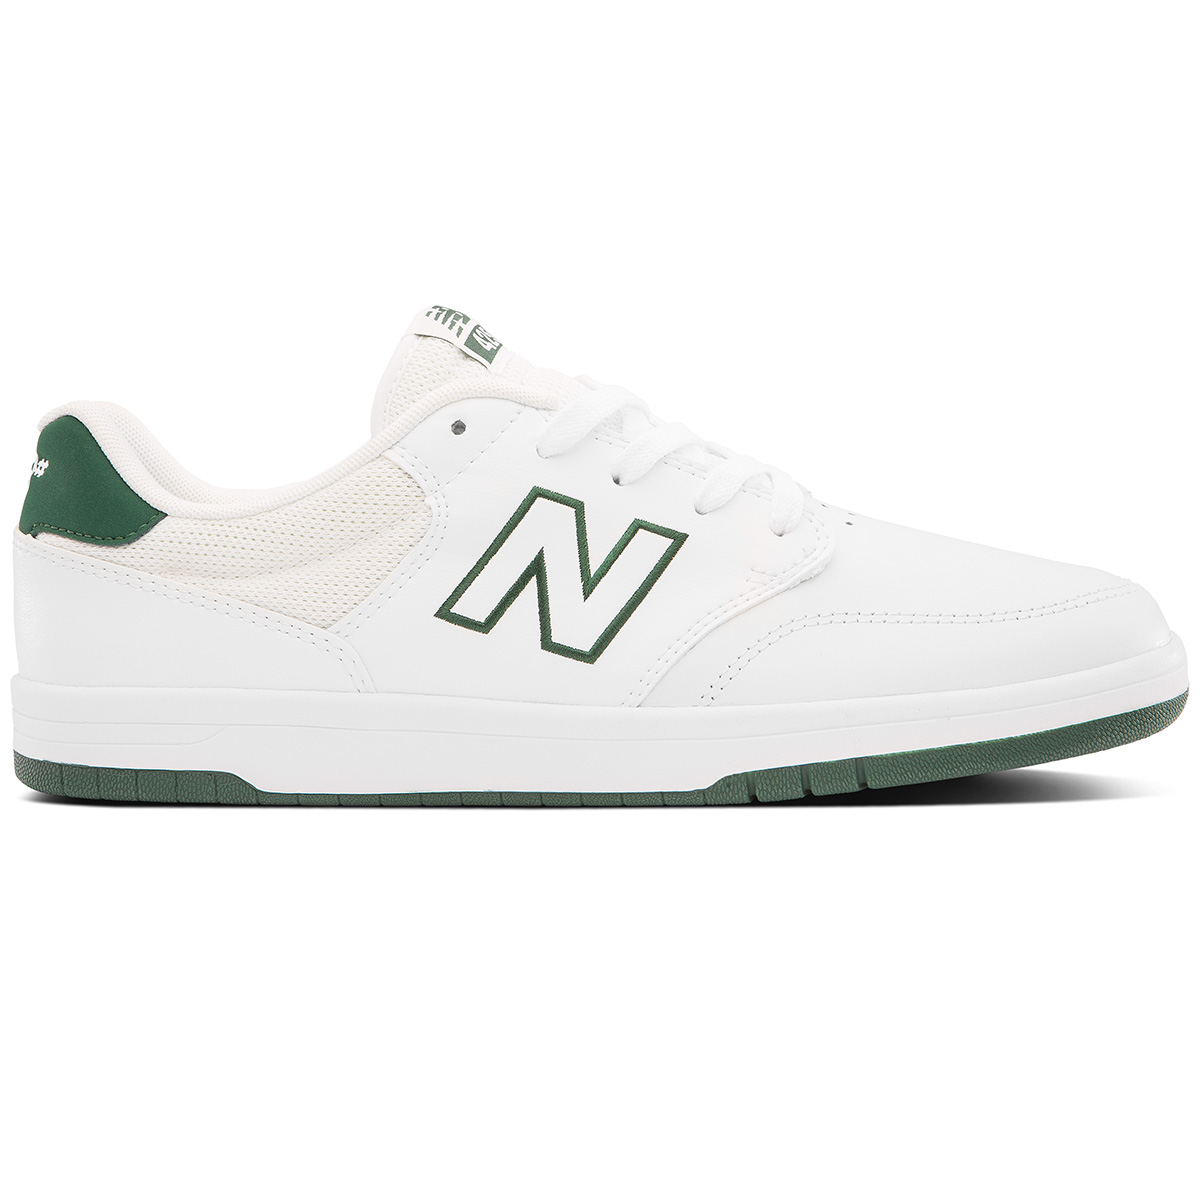 New Balance Numeric 425 White/Green